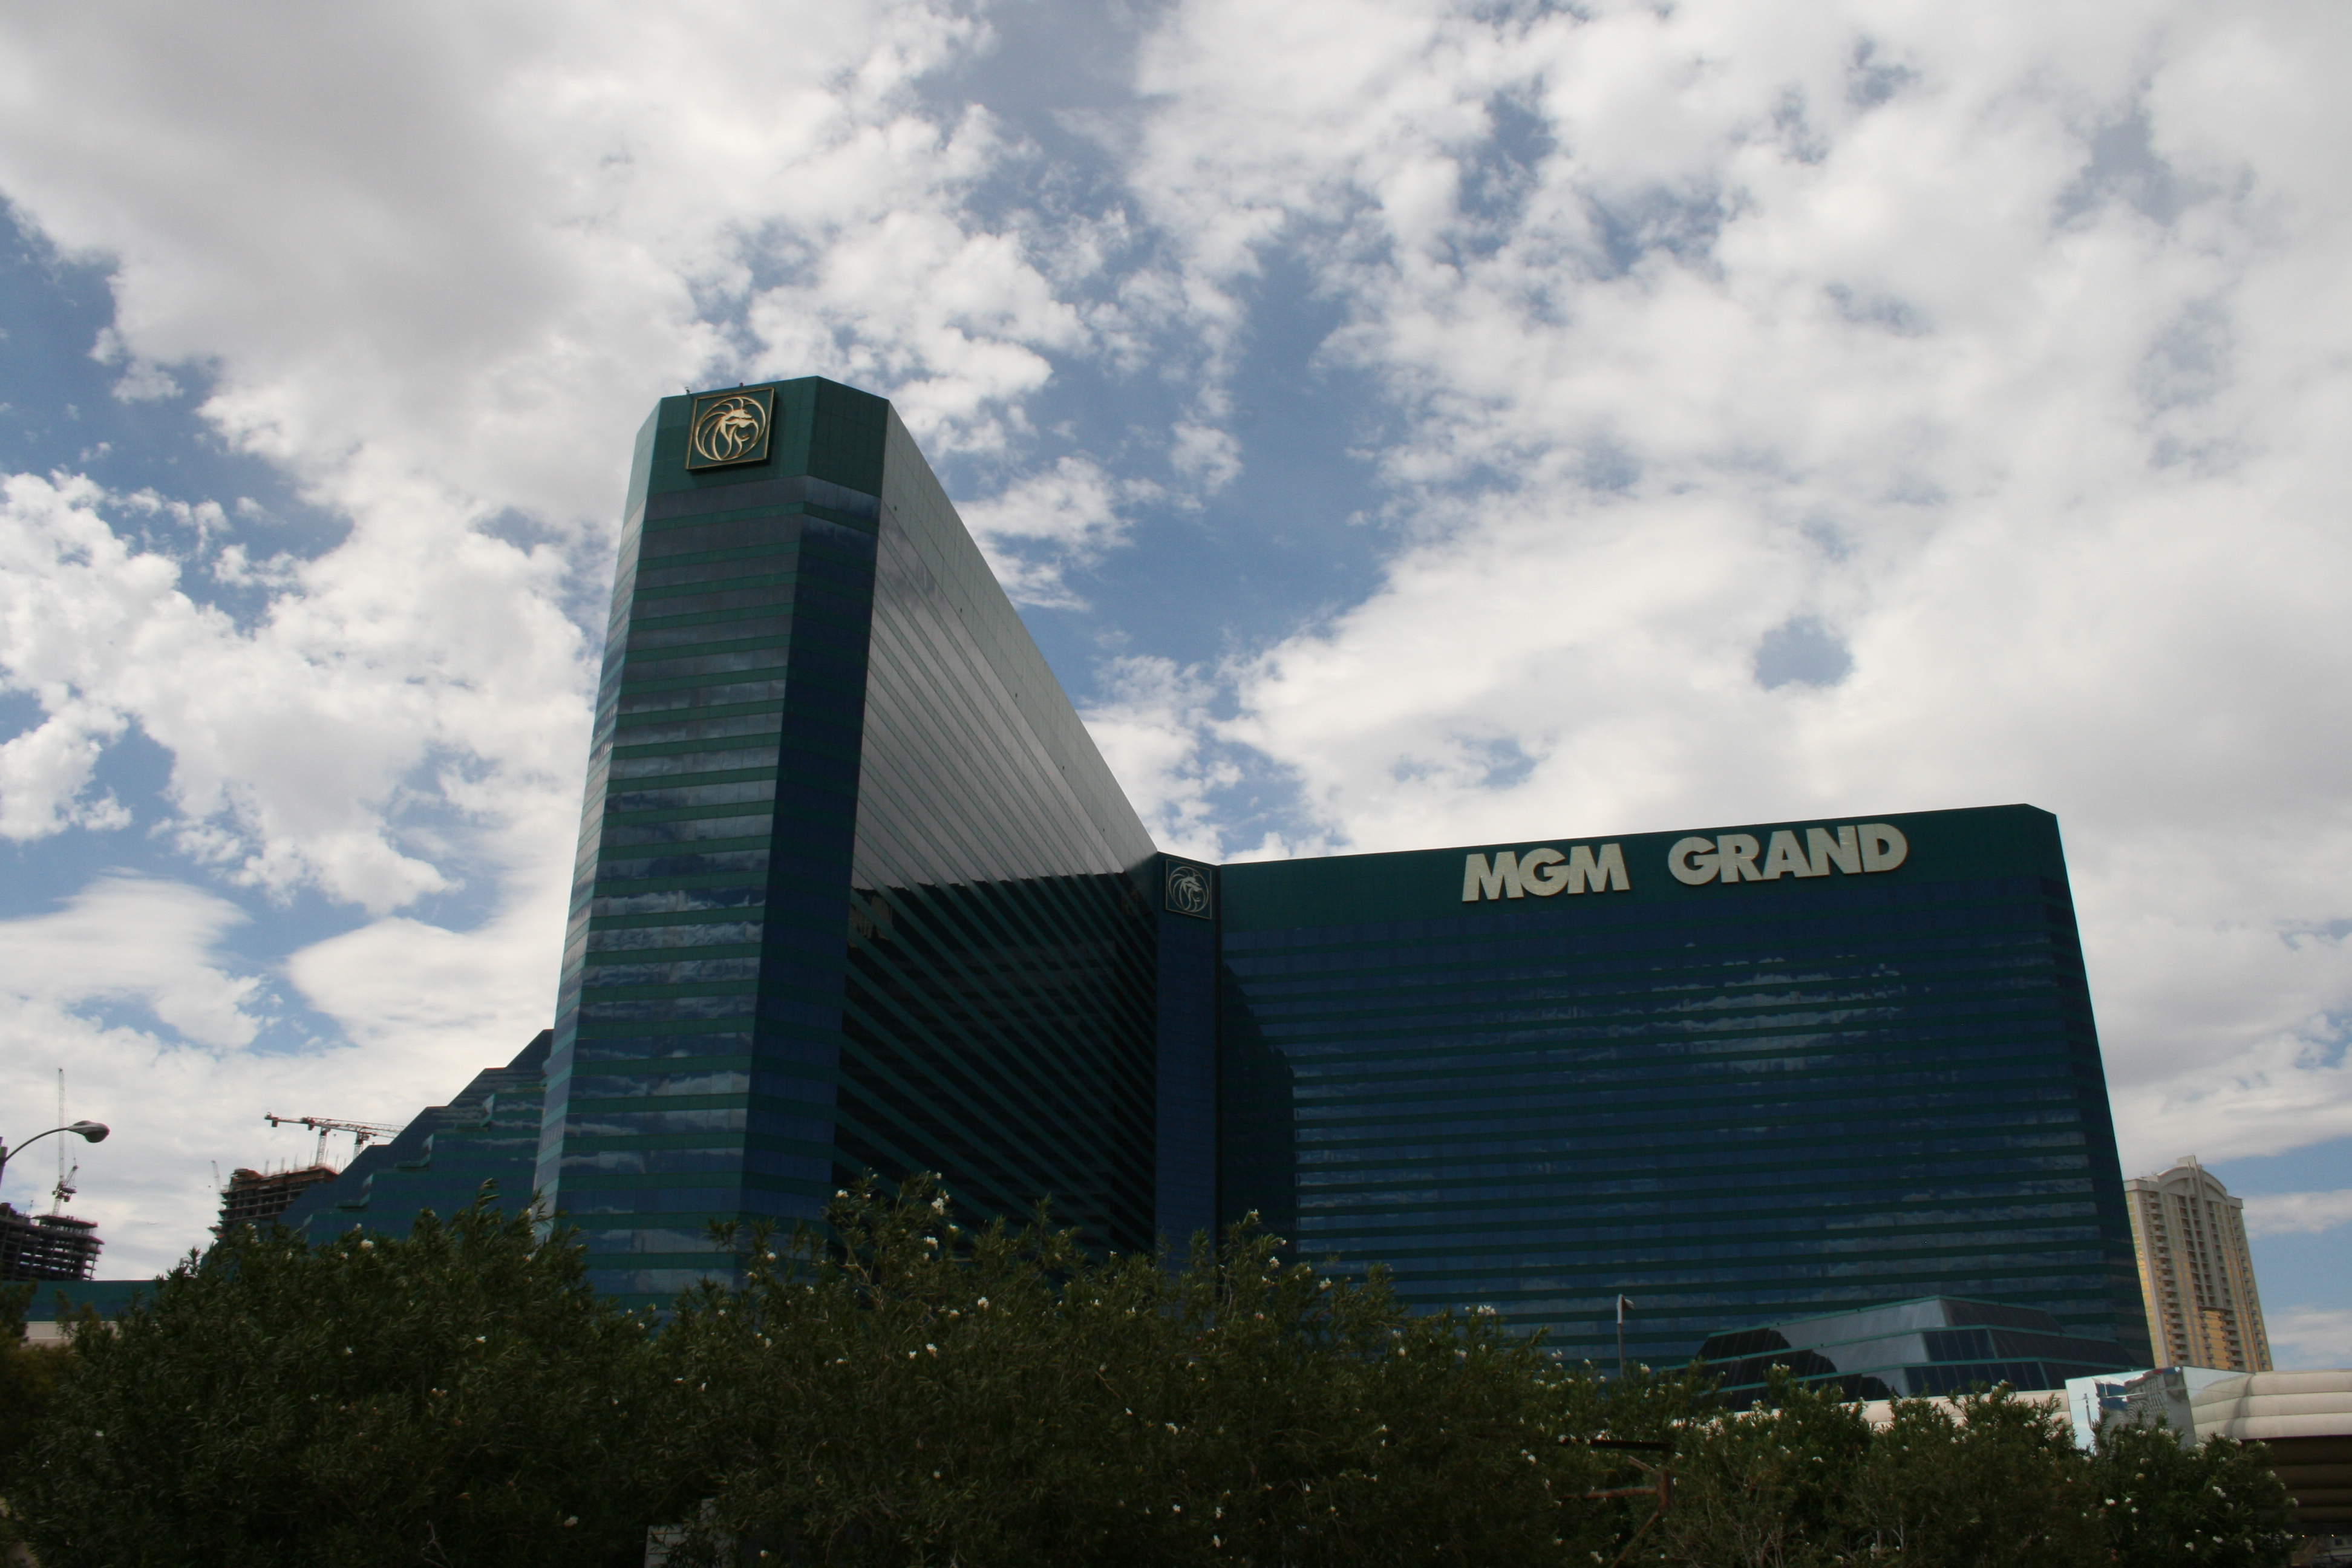 mgm grand casino logo